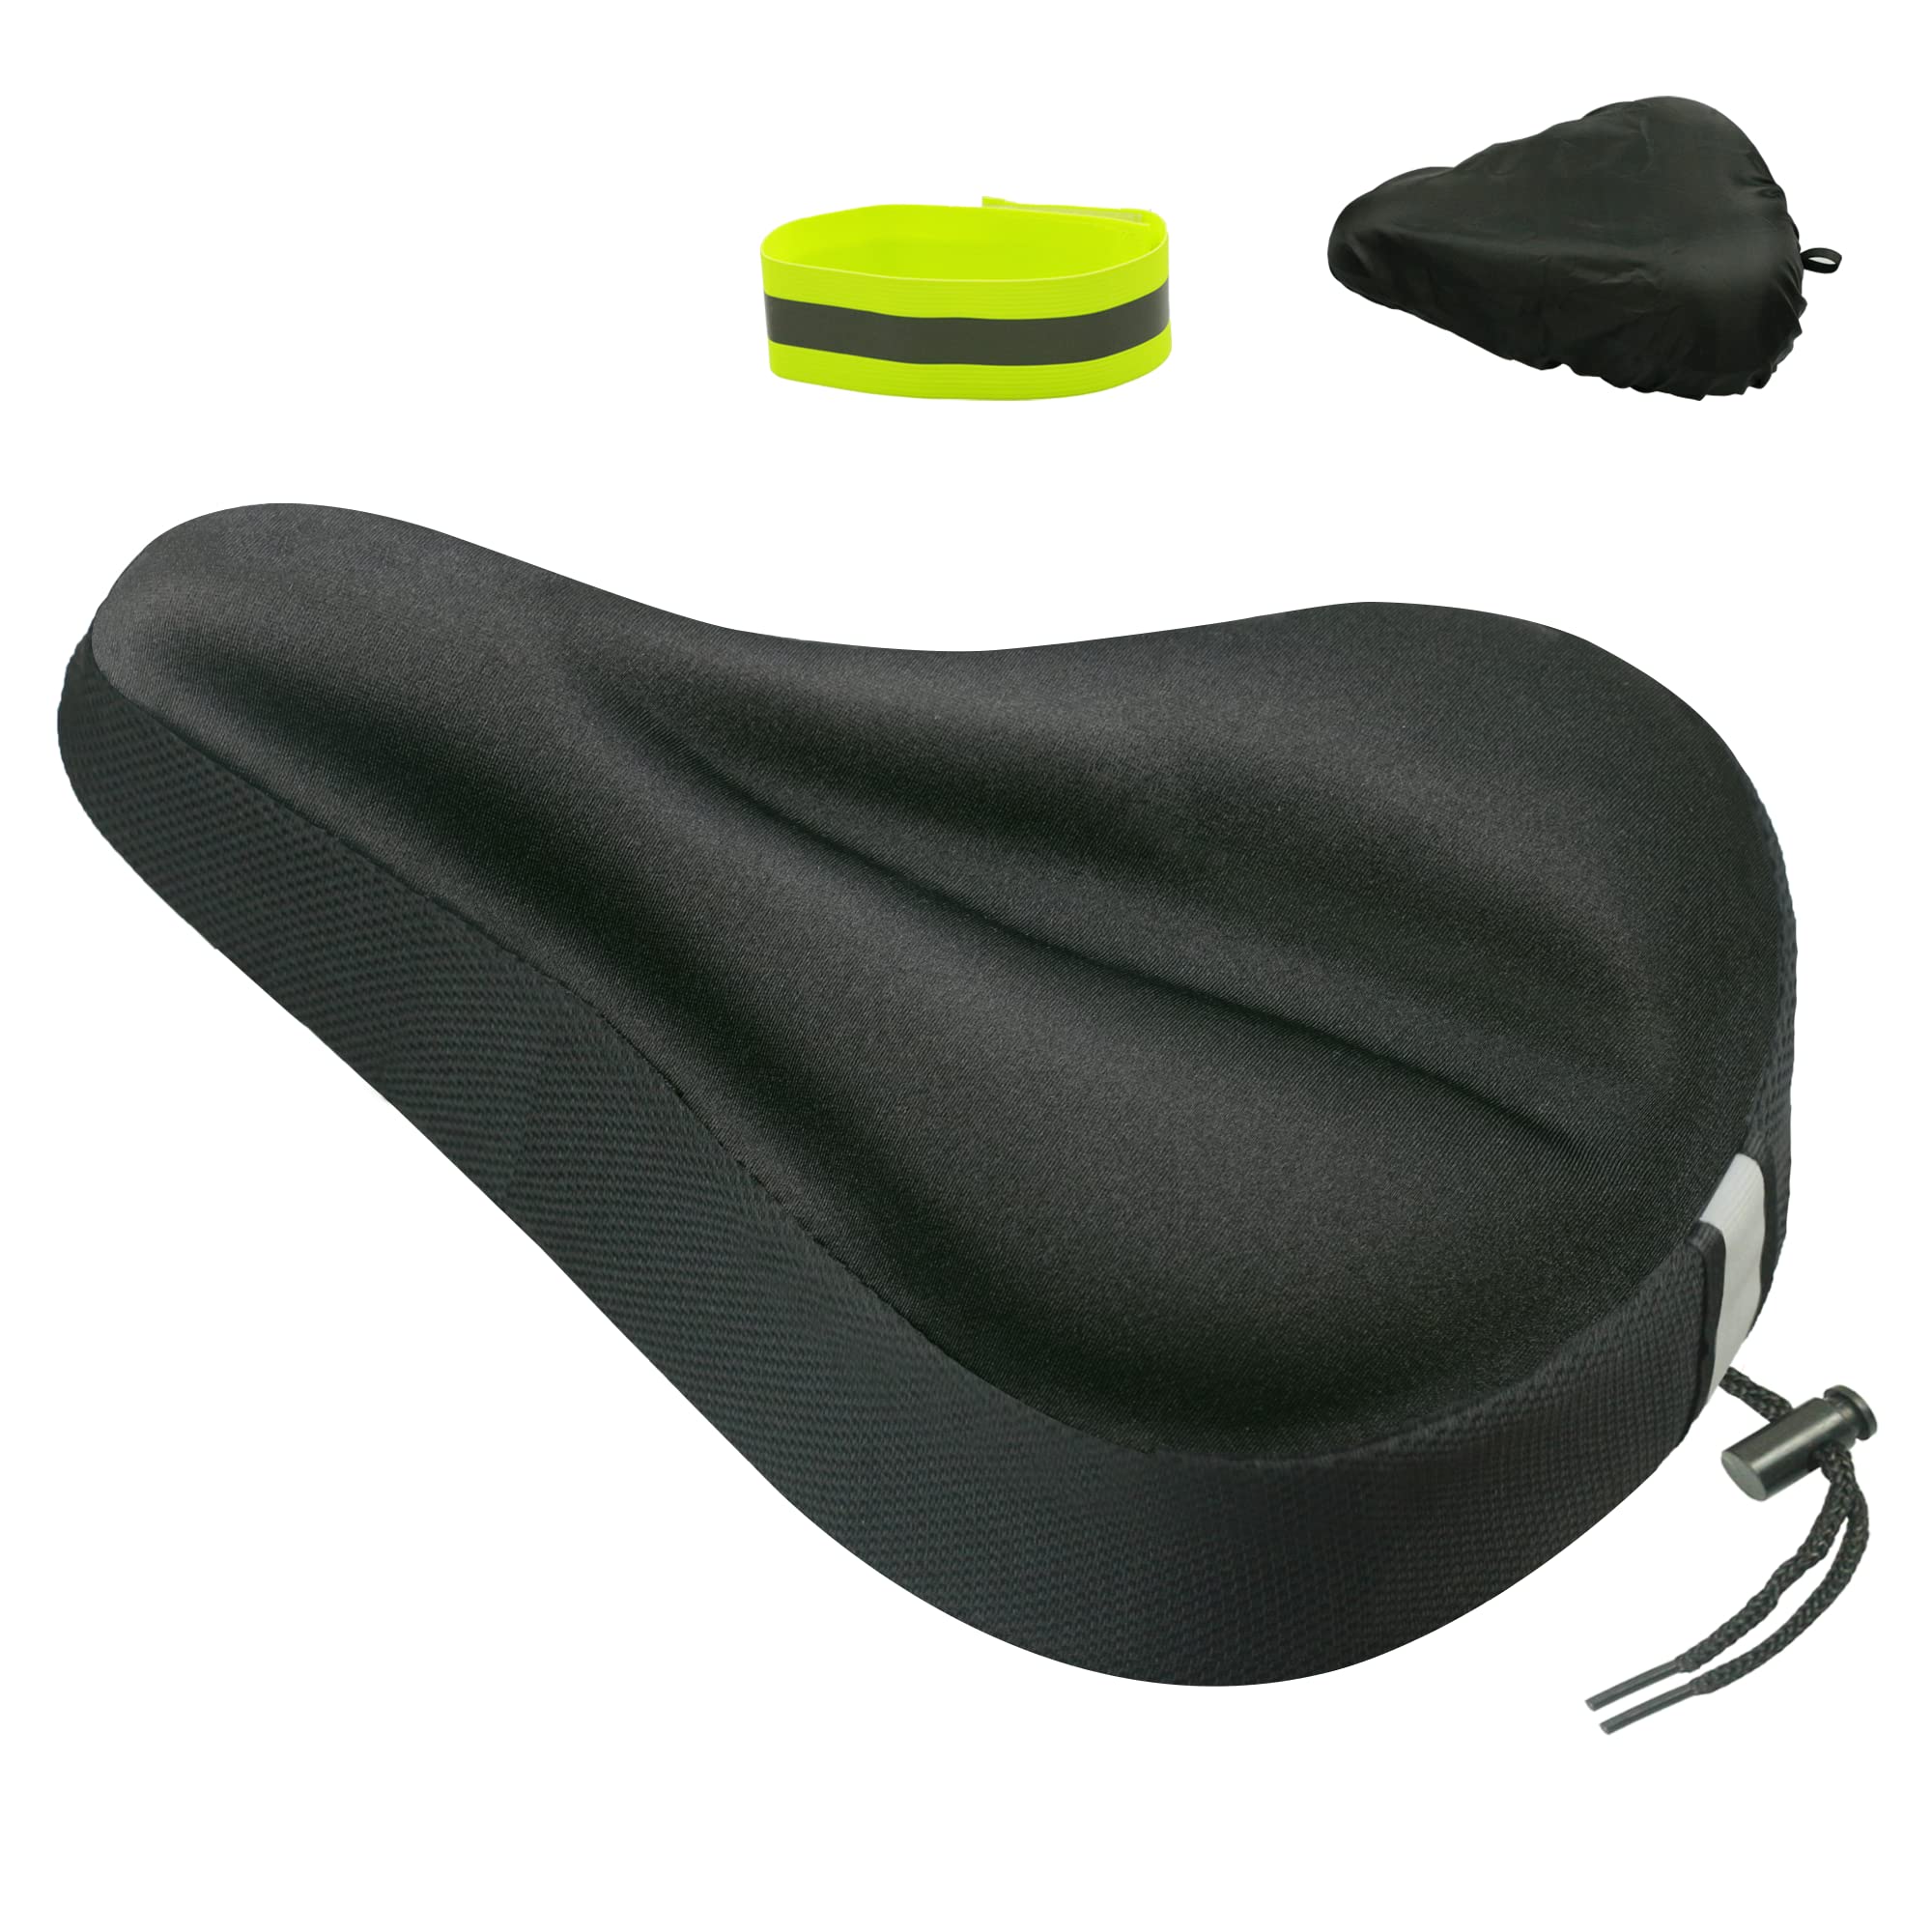 Large Wide Foam & Gel Padded Exercise Bike Seat Cover Bicycle Saddle Cushion